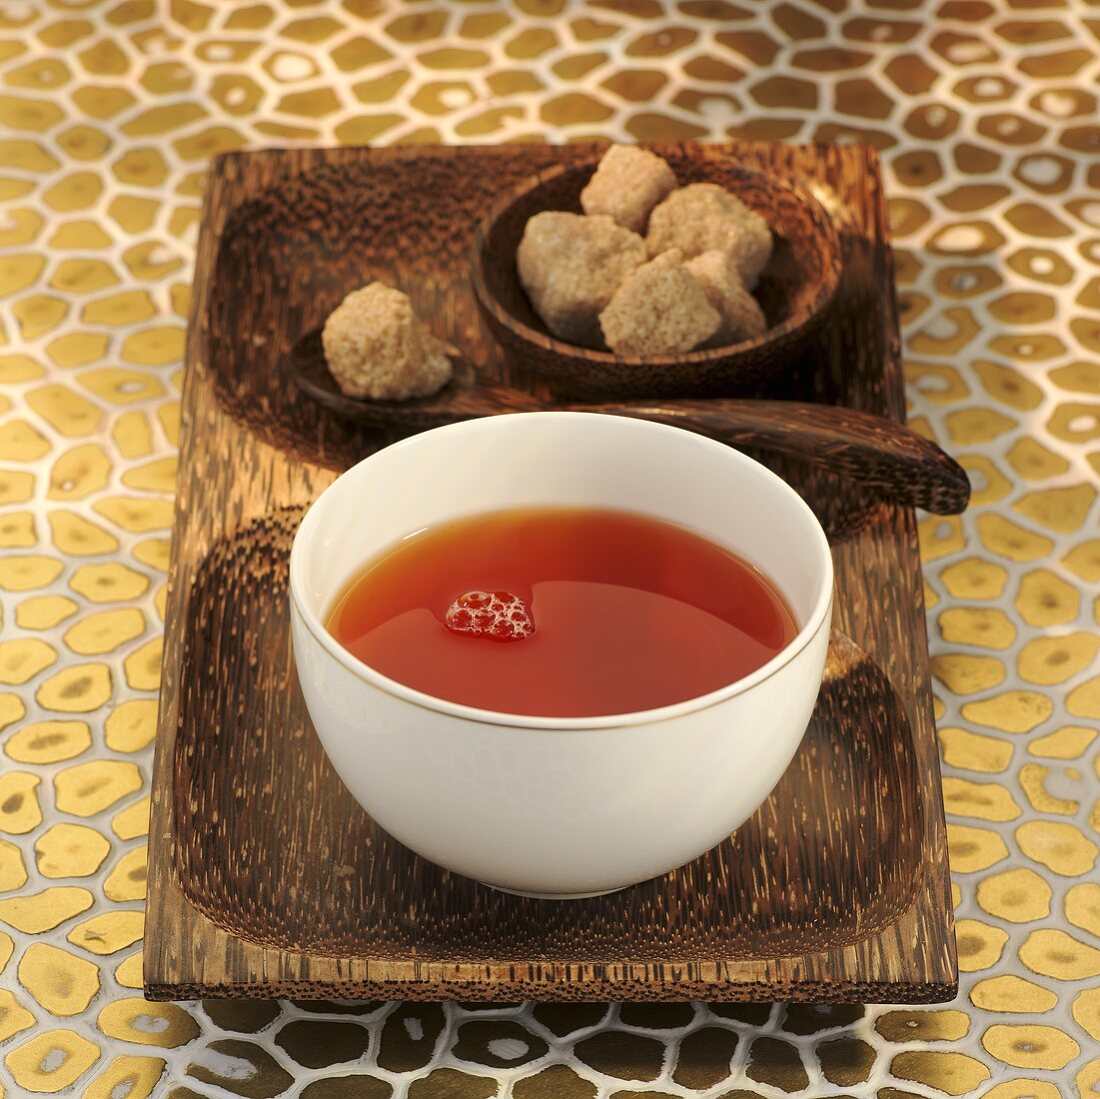 Rooibos tea in white bowl, brown sugar cubes behind